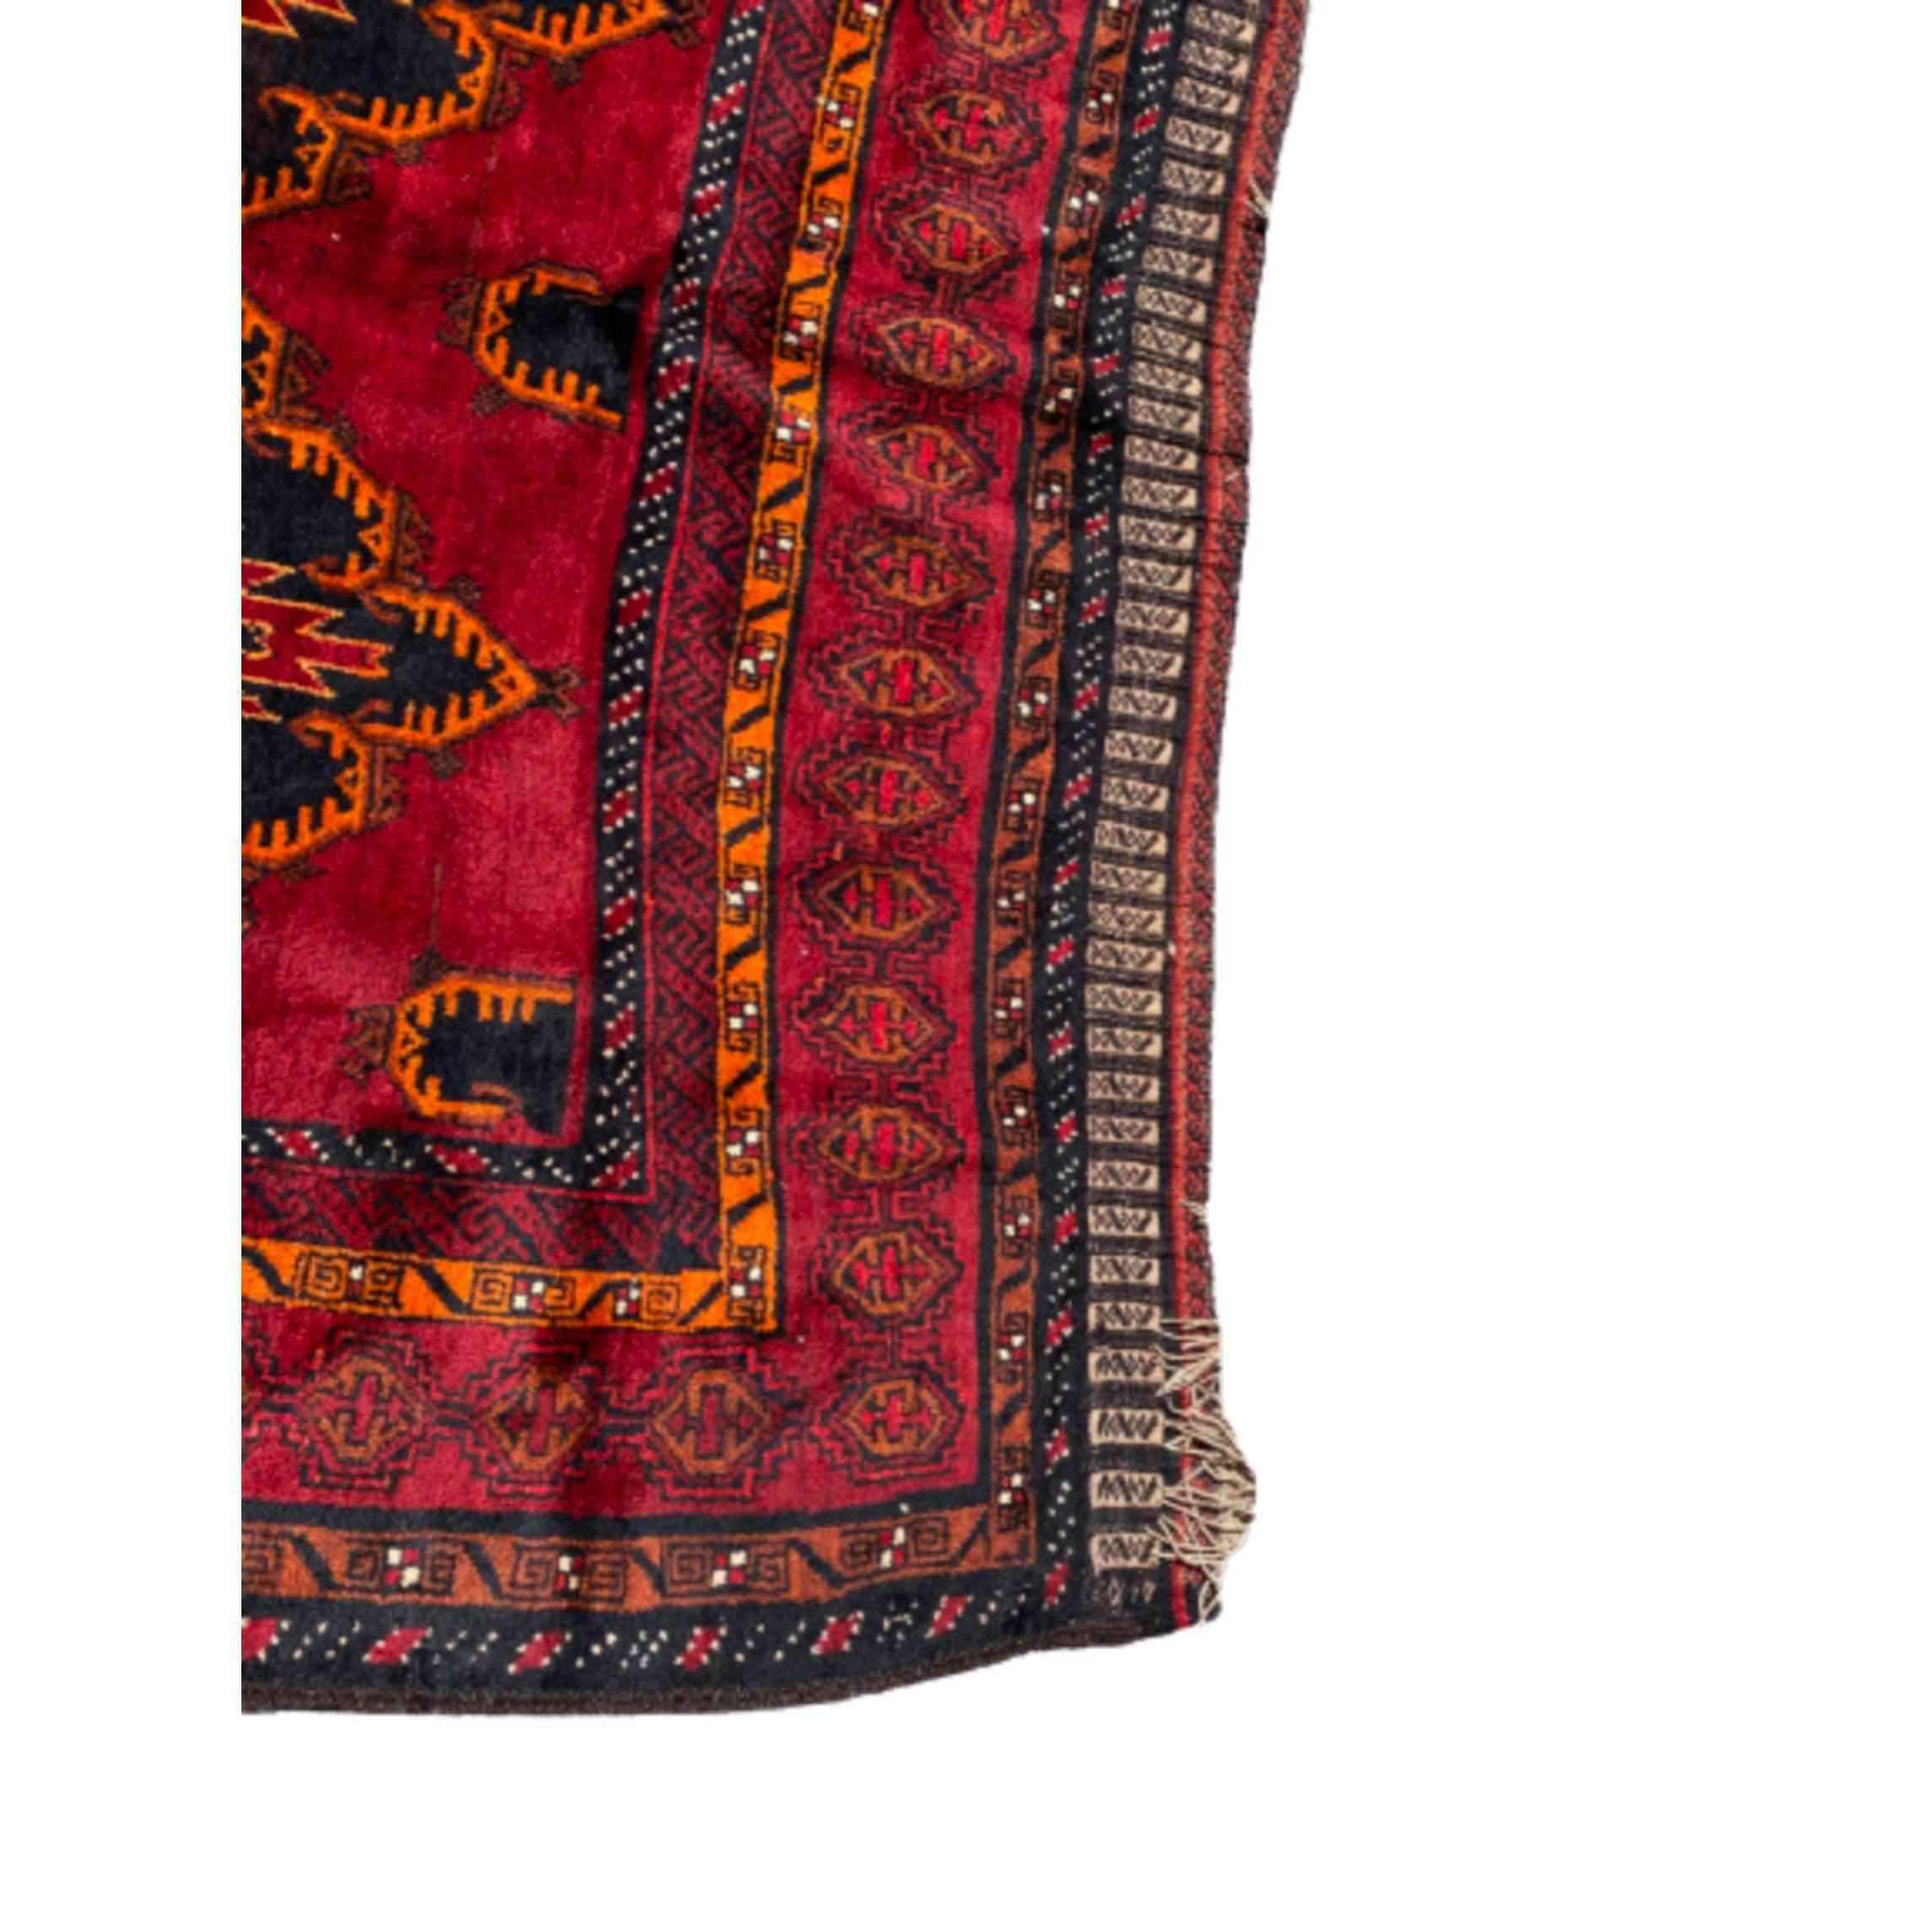 307 x 175 cm Old Afghan Tribal Red Large Rug - Rugmaster